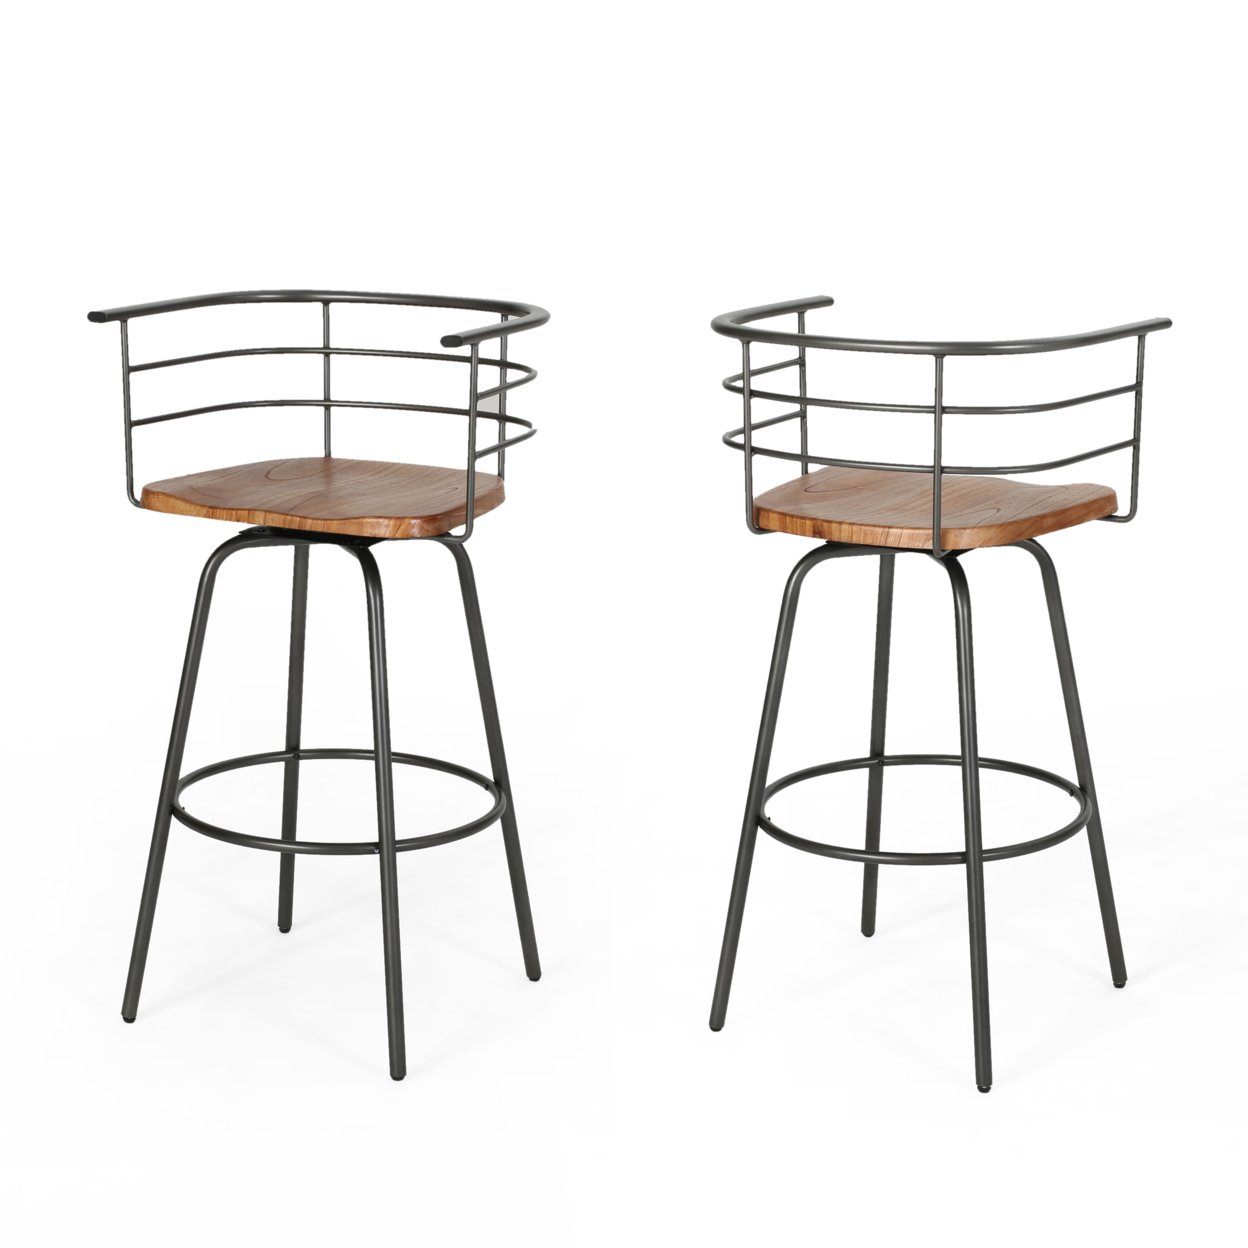 Jasmine Industrial Modern 29 Swivel Barstool With Rubberwood Seat (Set Of 2) - Dark Brown + Gray